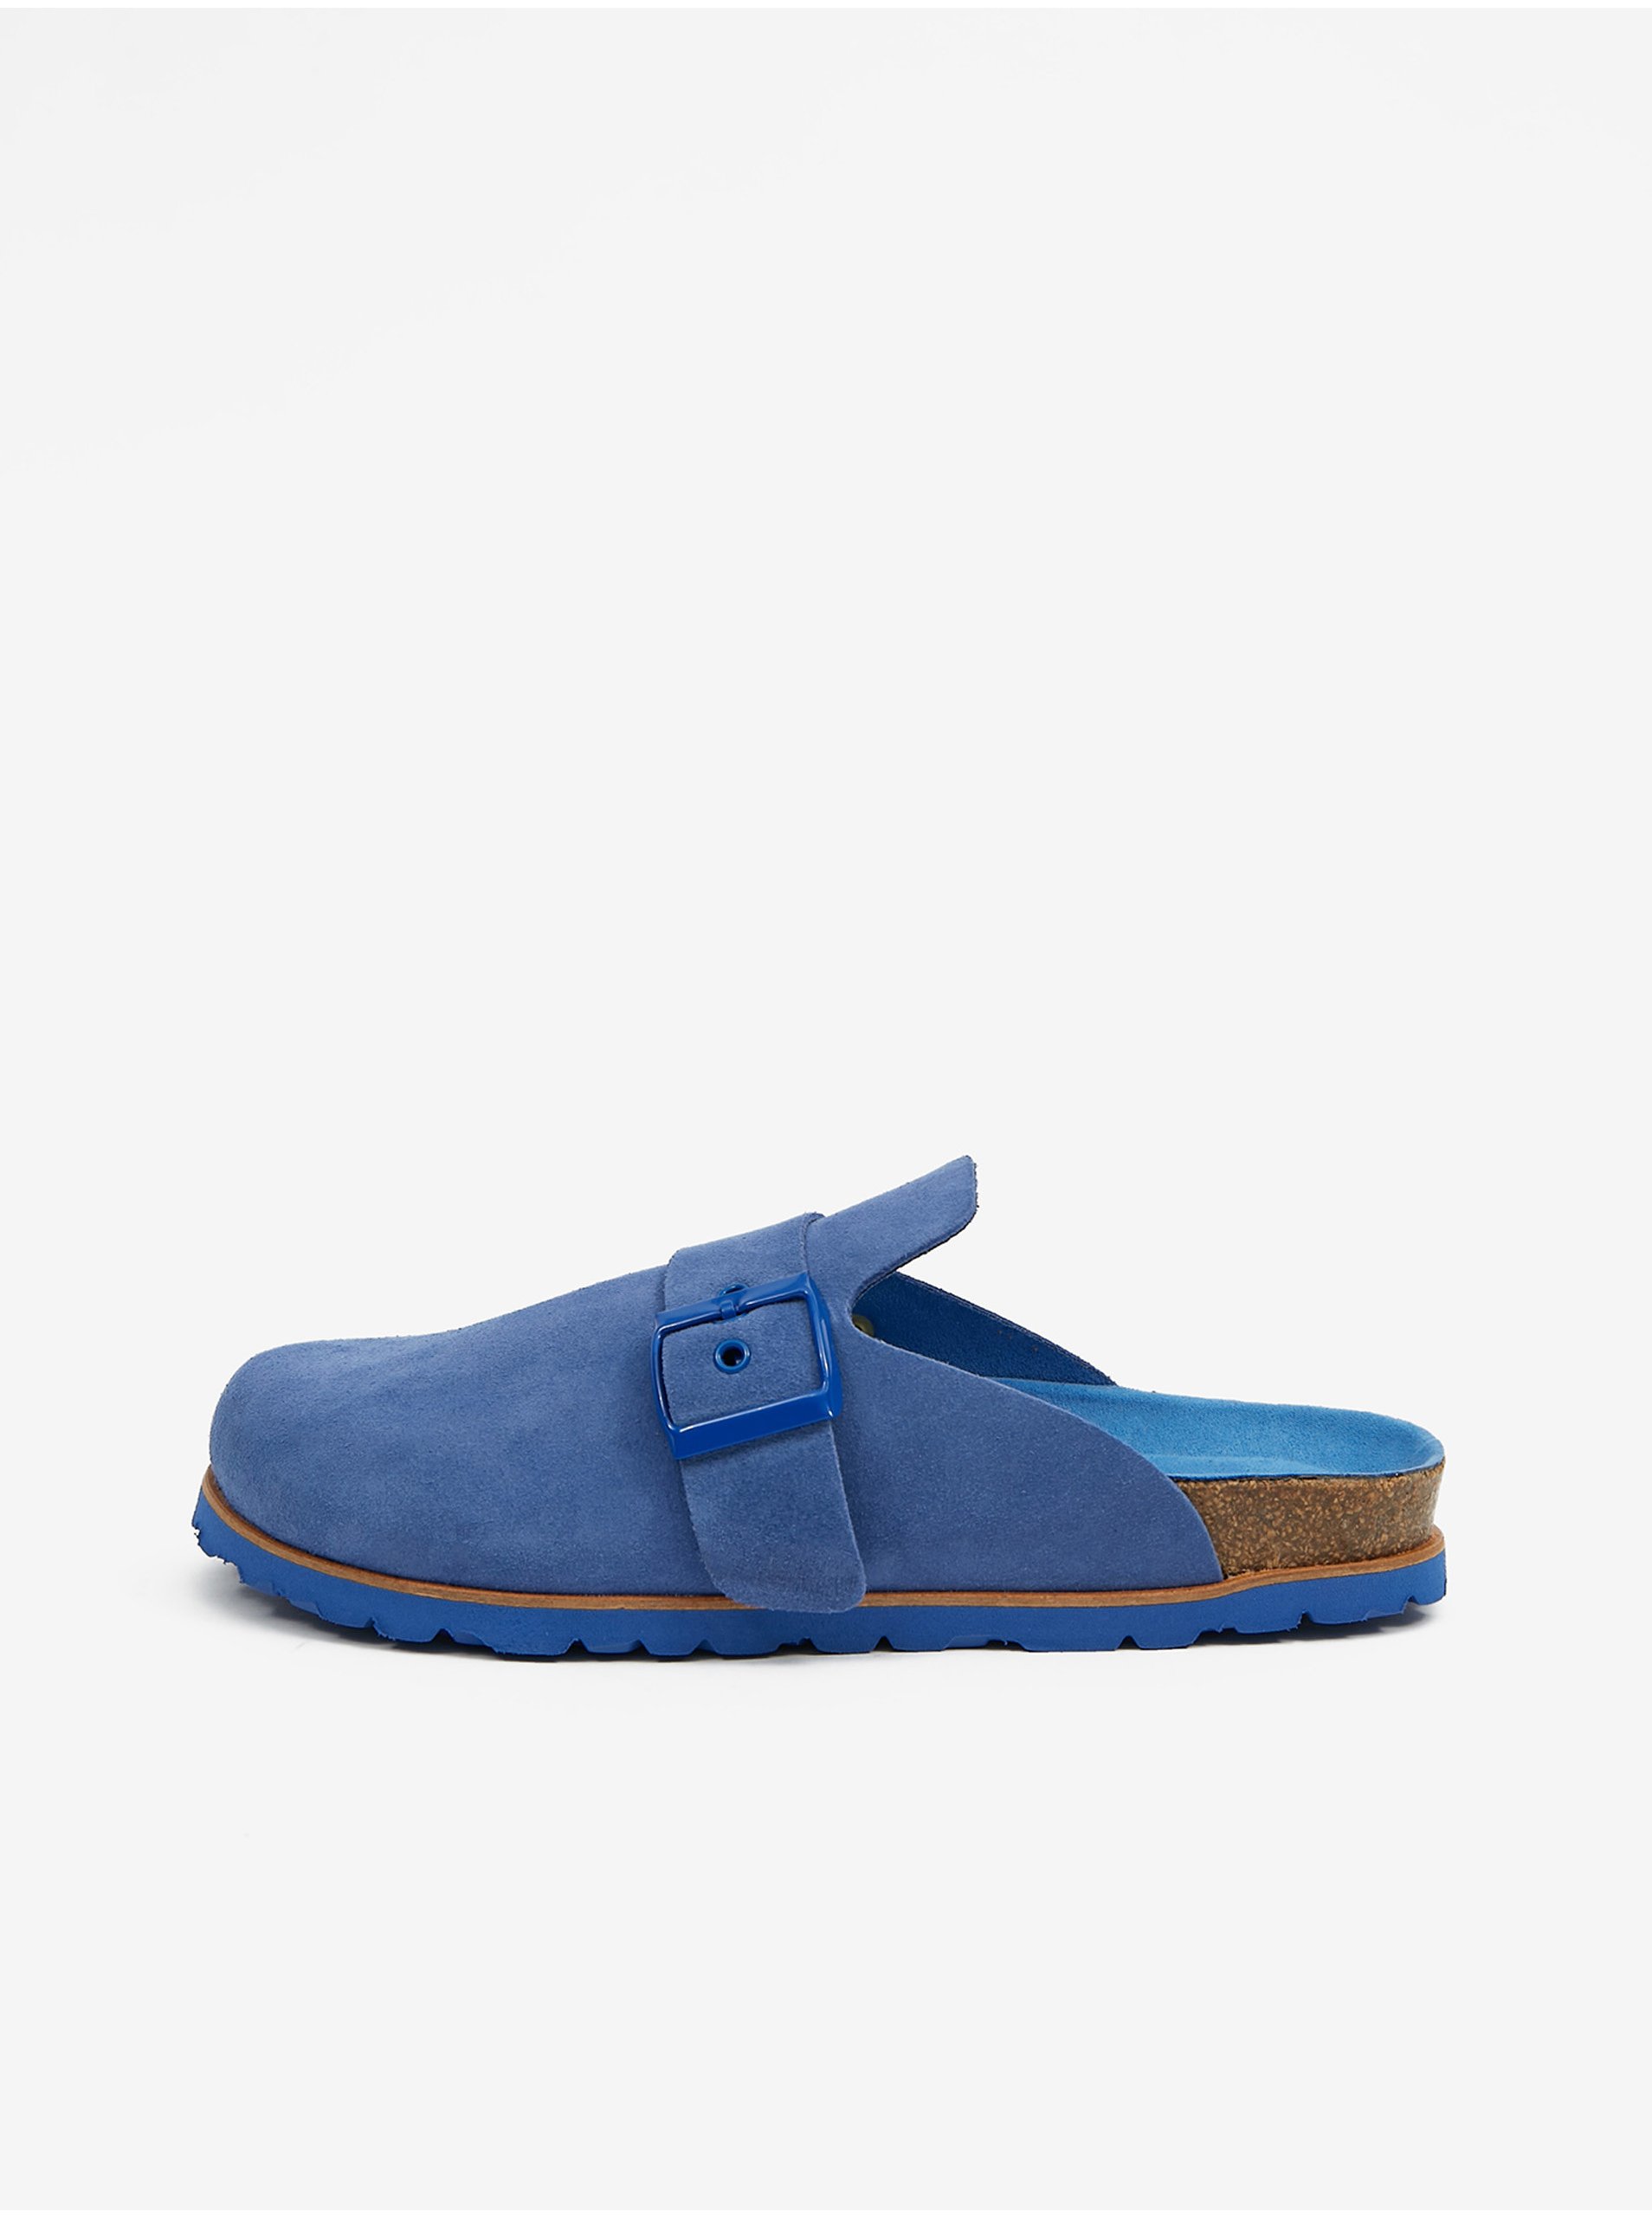 E-shop Modré dámské semišové pantofle OJJU